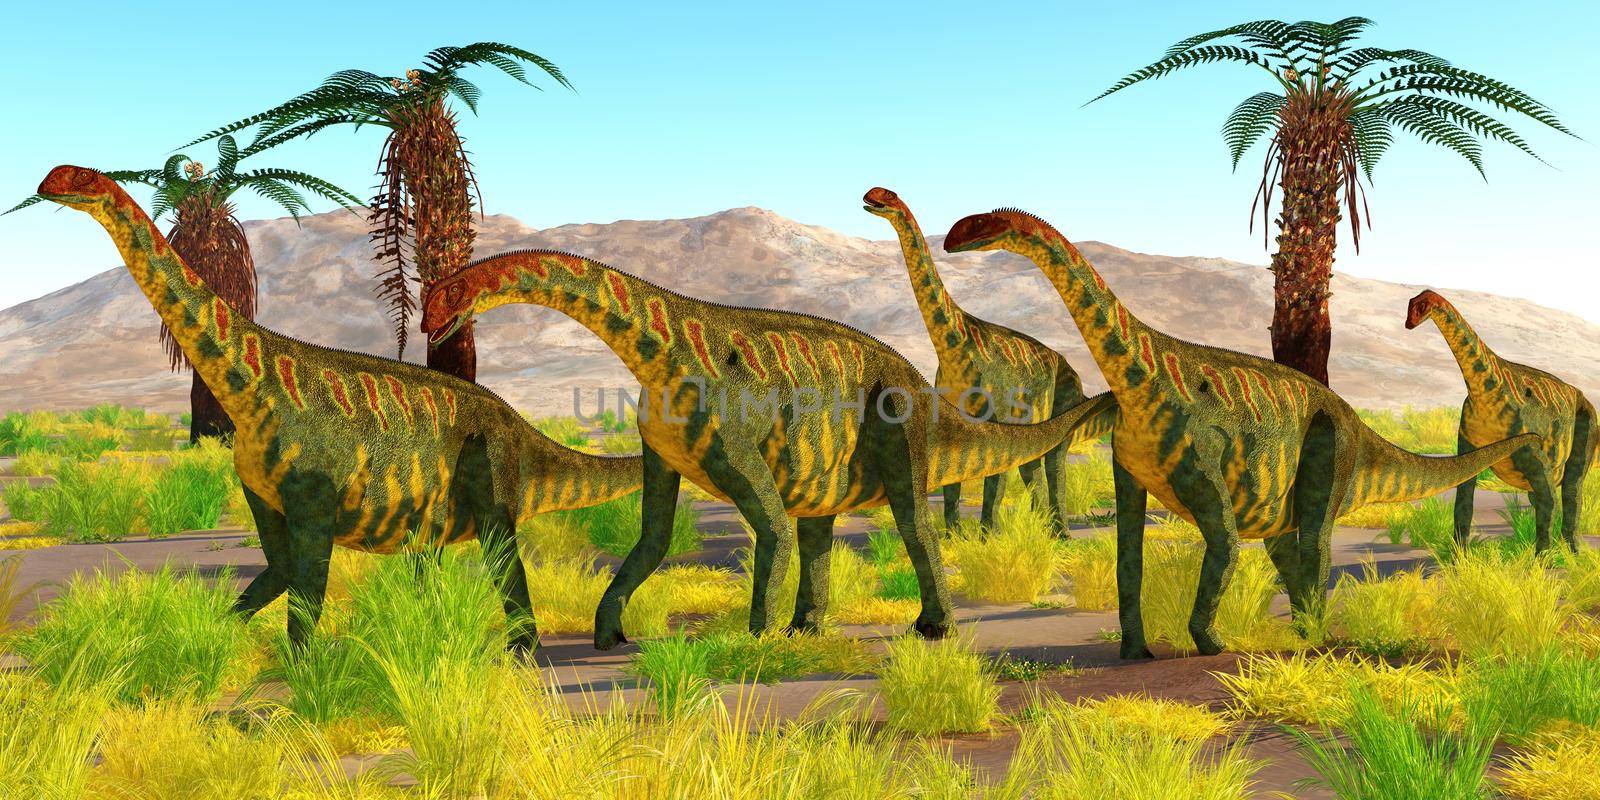 Jobaria Dinosaurs by Catmando